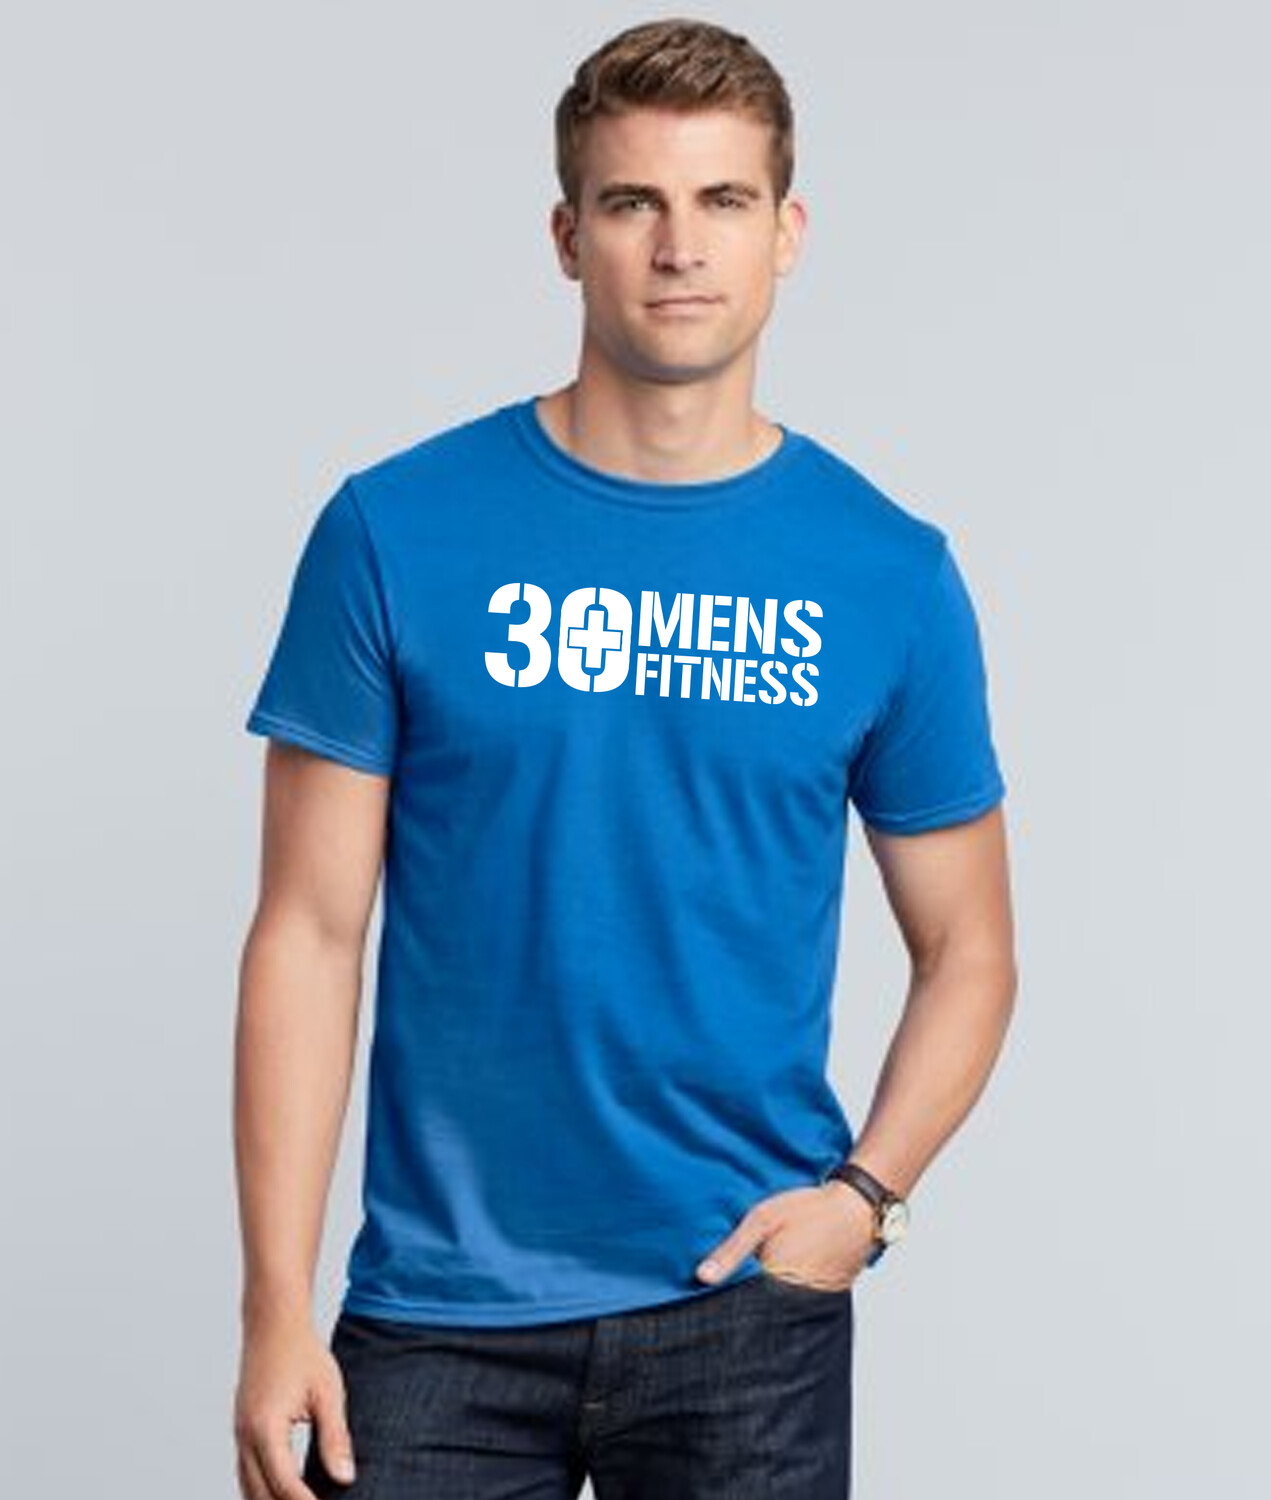 30+ Mens Fitness cotton T-Shirt